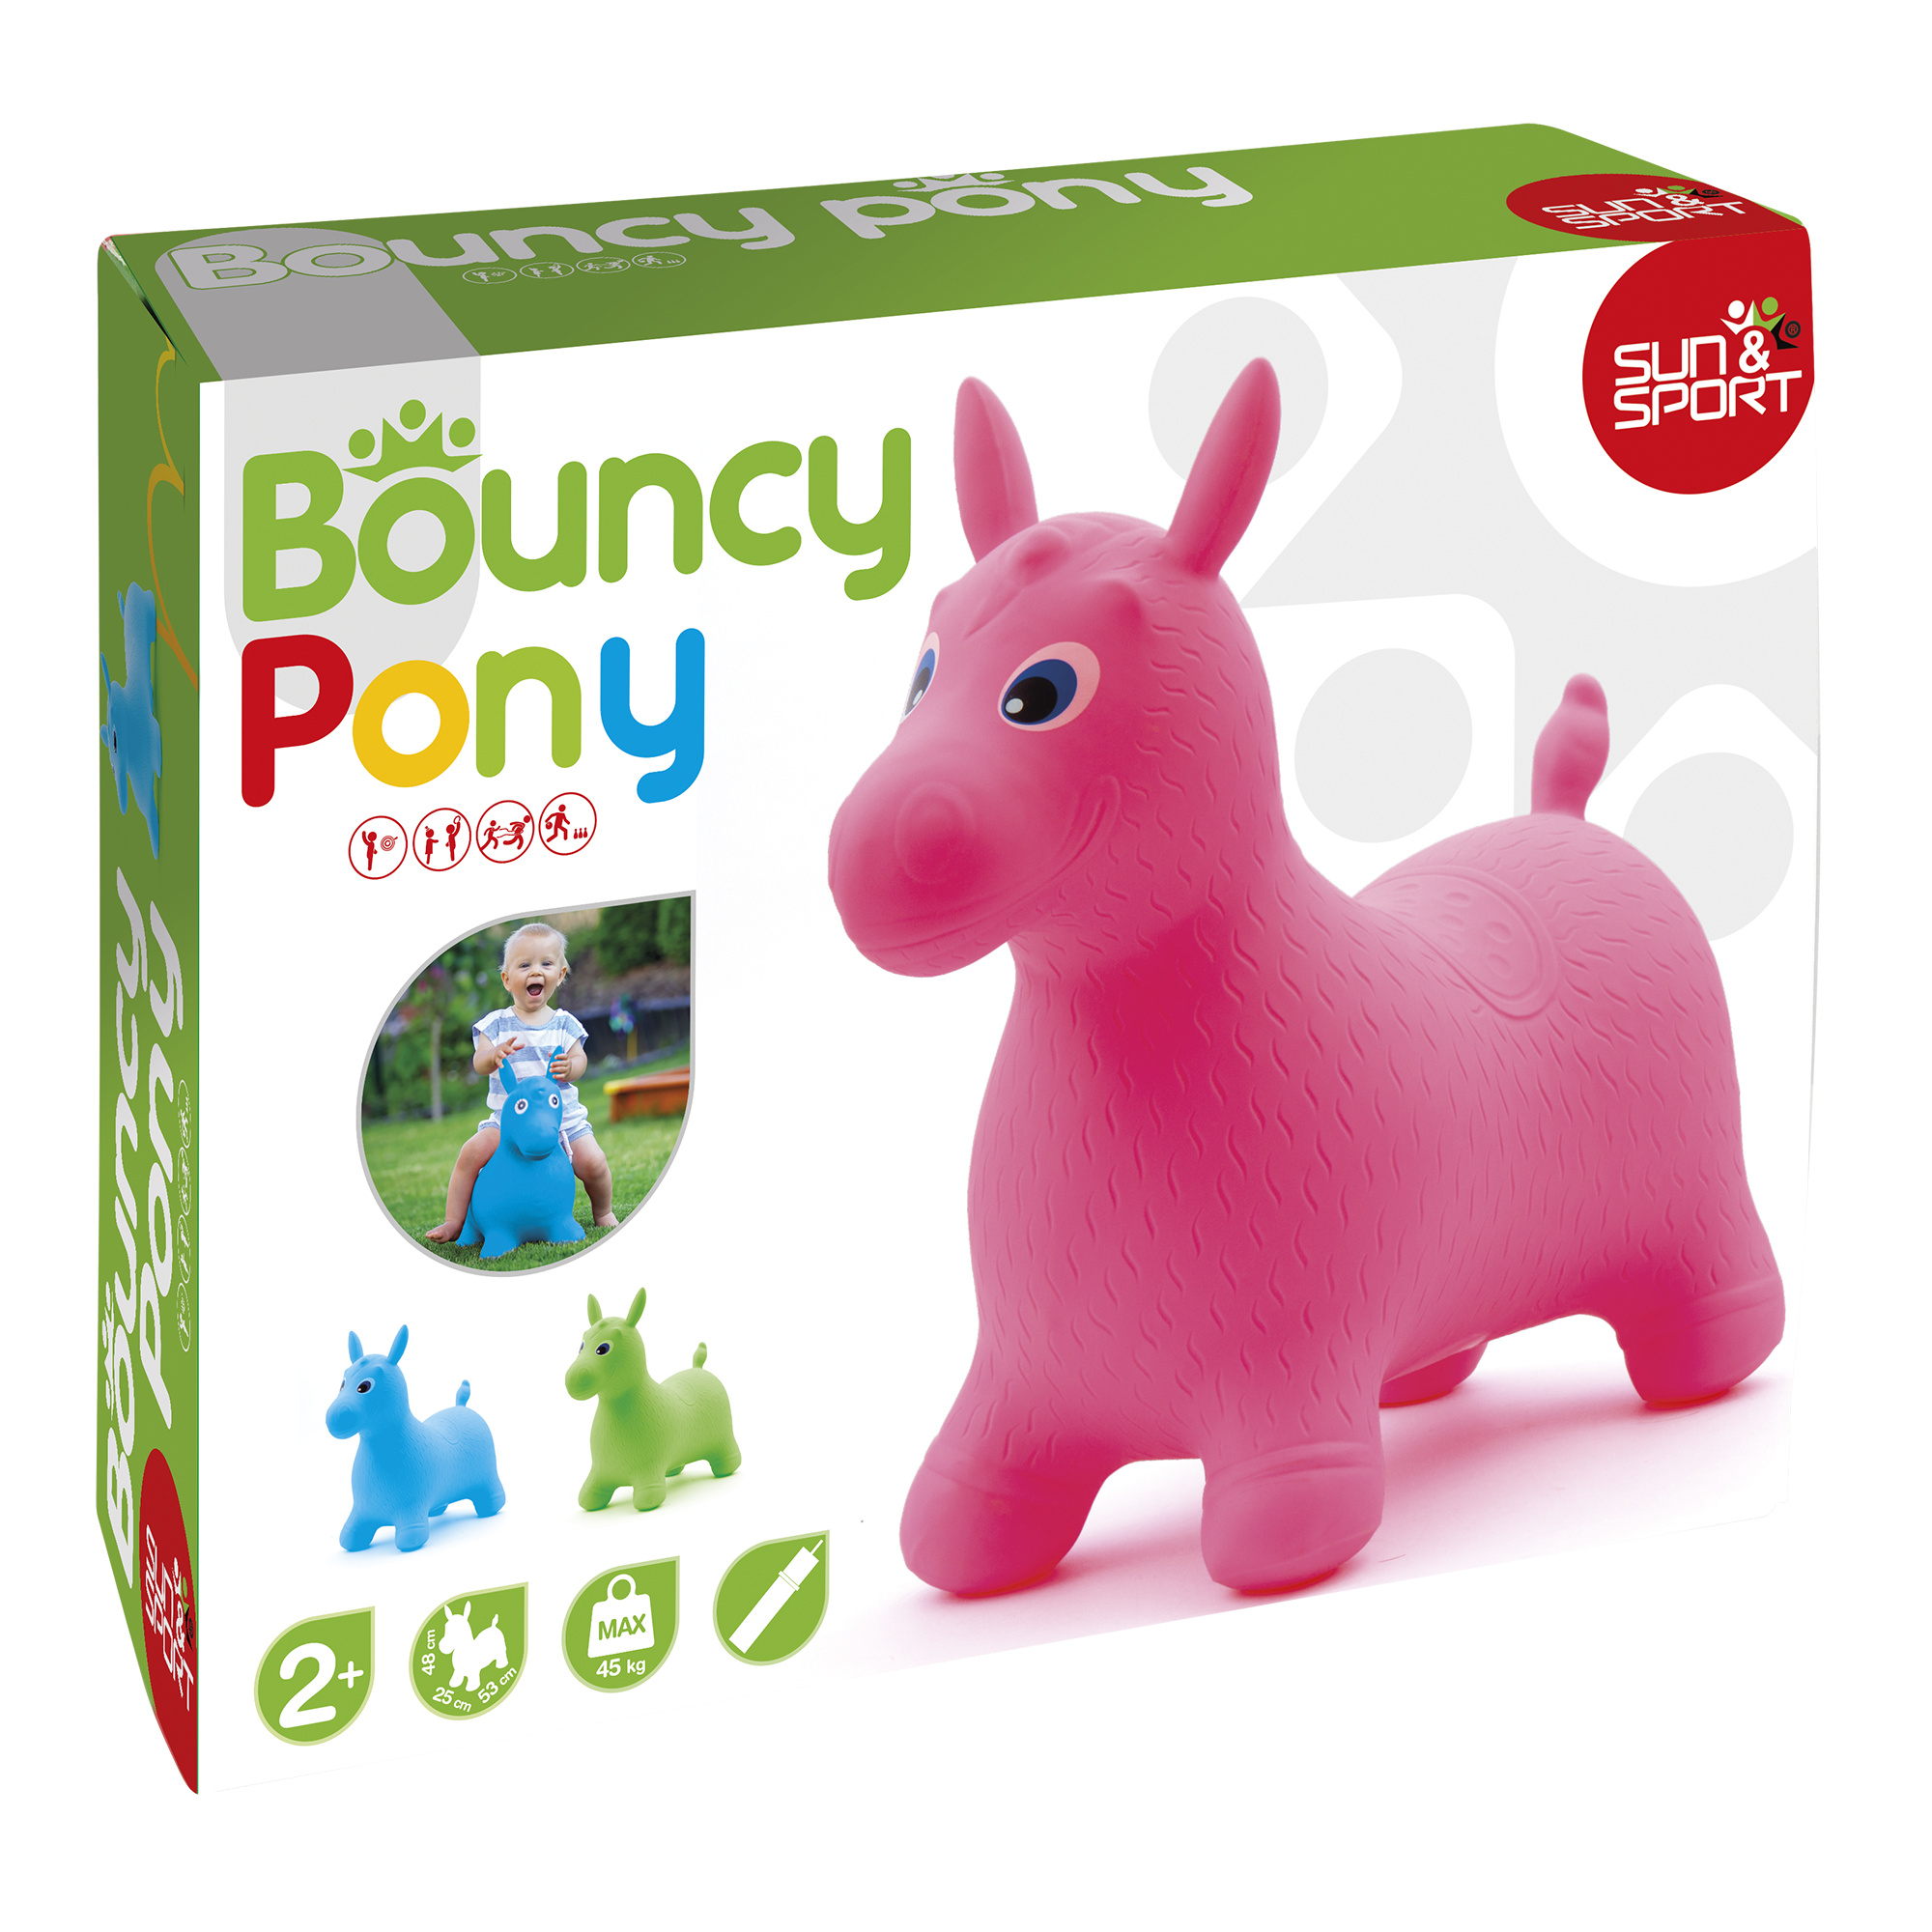 Bouncy pony assortito in vari colori - sun &amp; sport - SUN&amp;SPORT